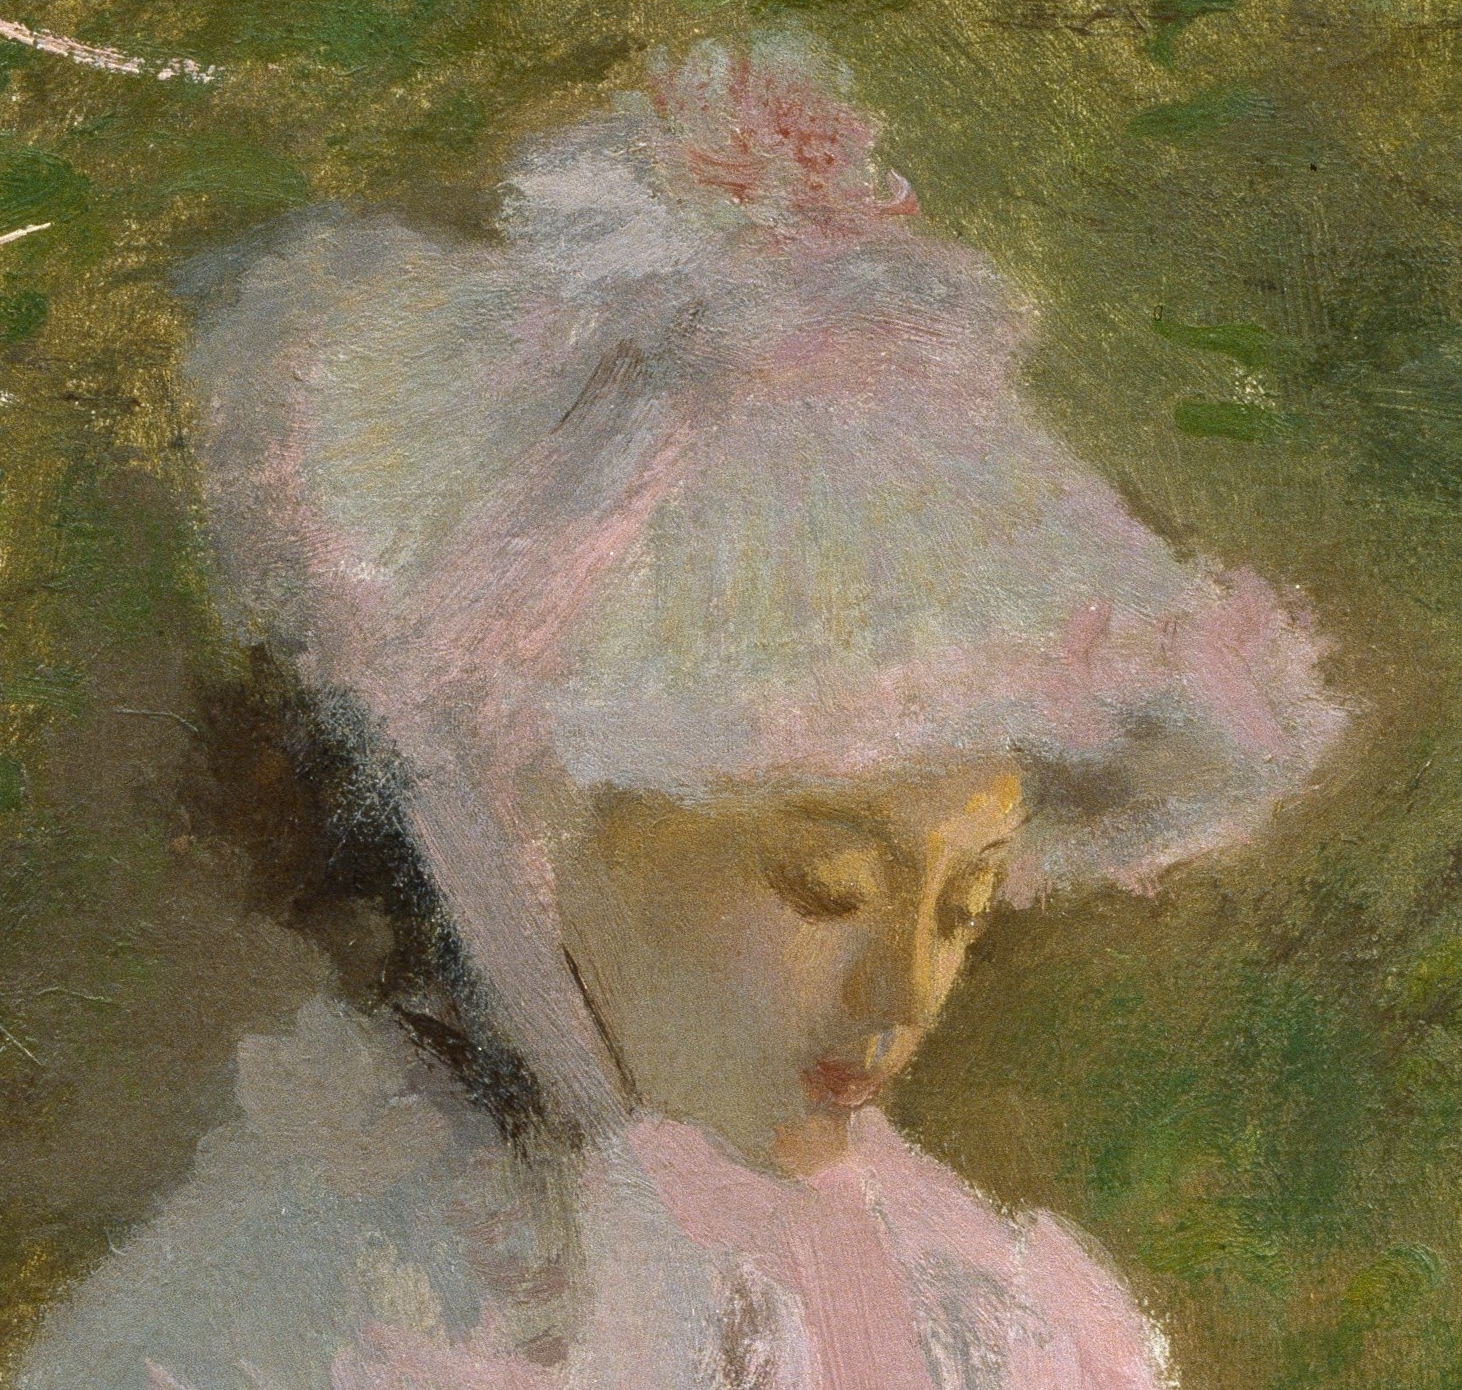 Claude+Monet-1840-1926 (705).jpg